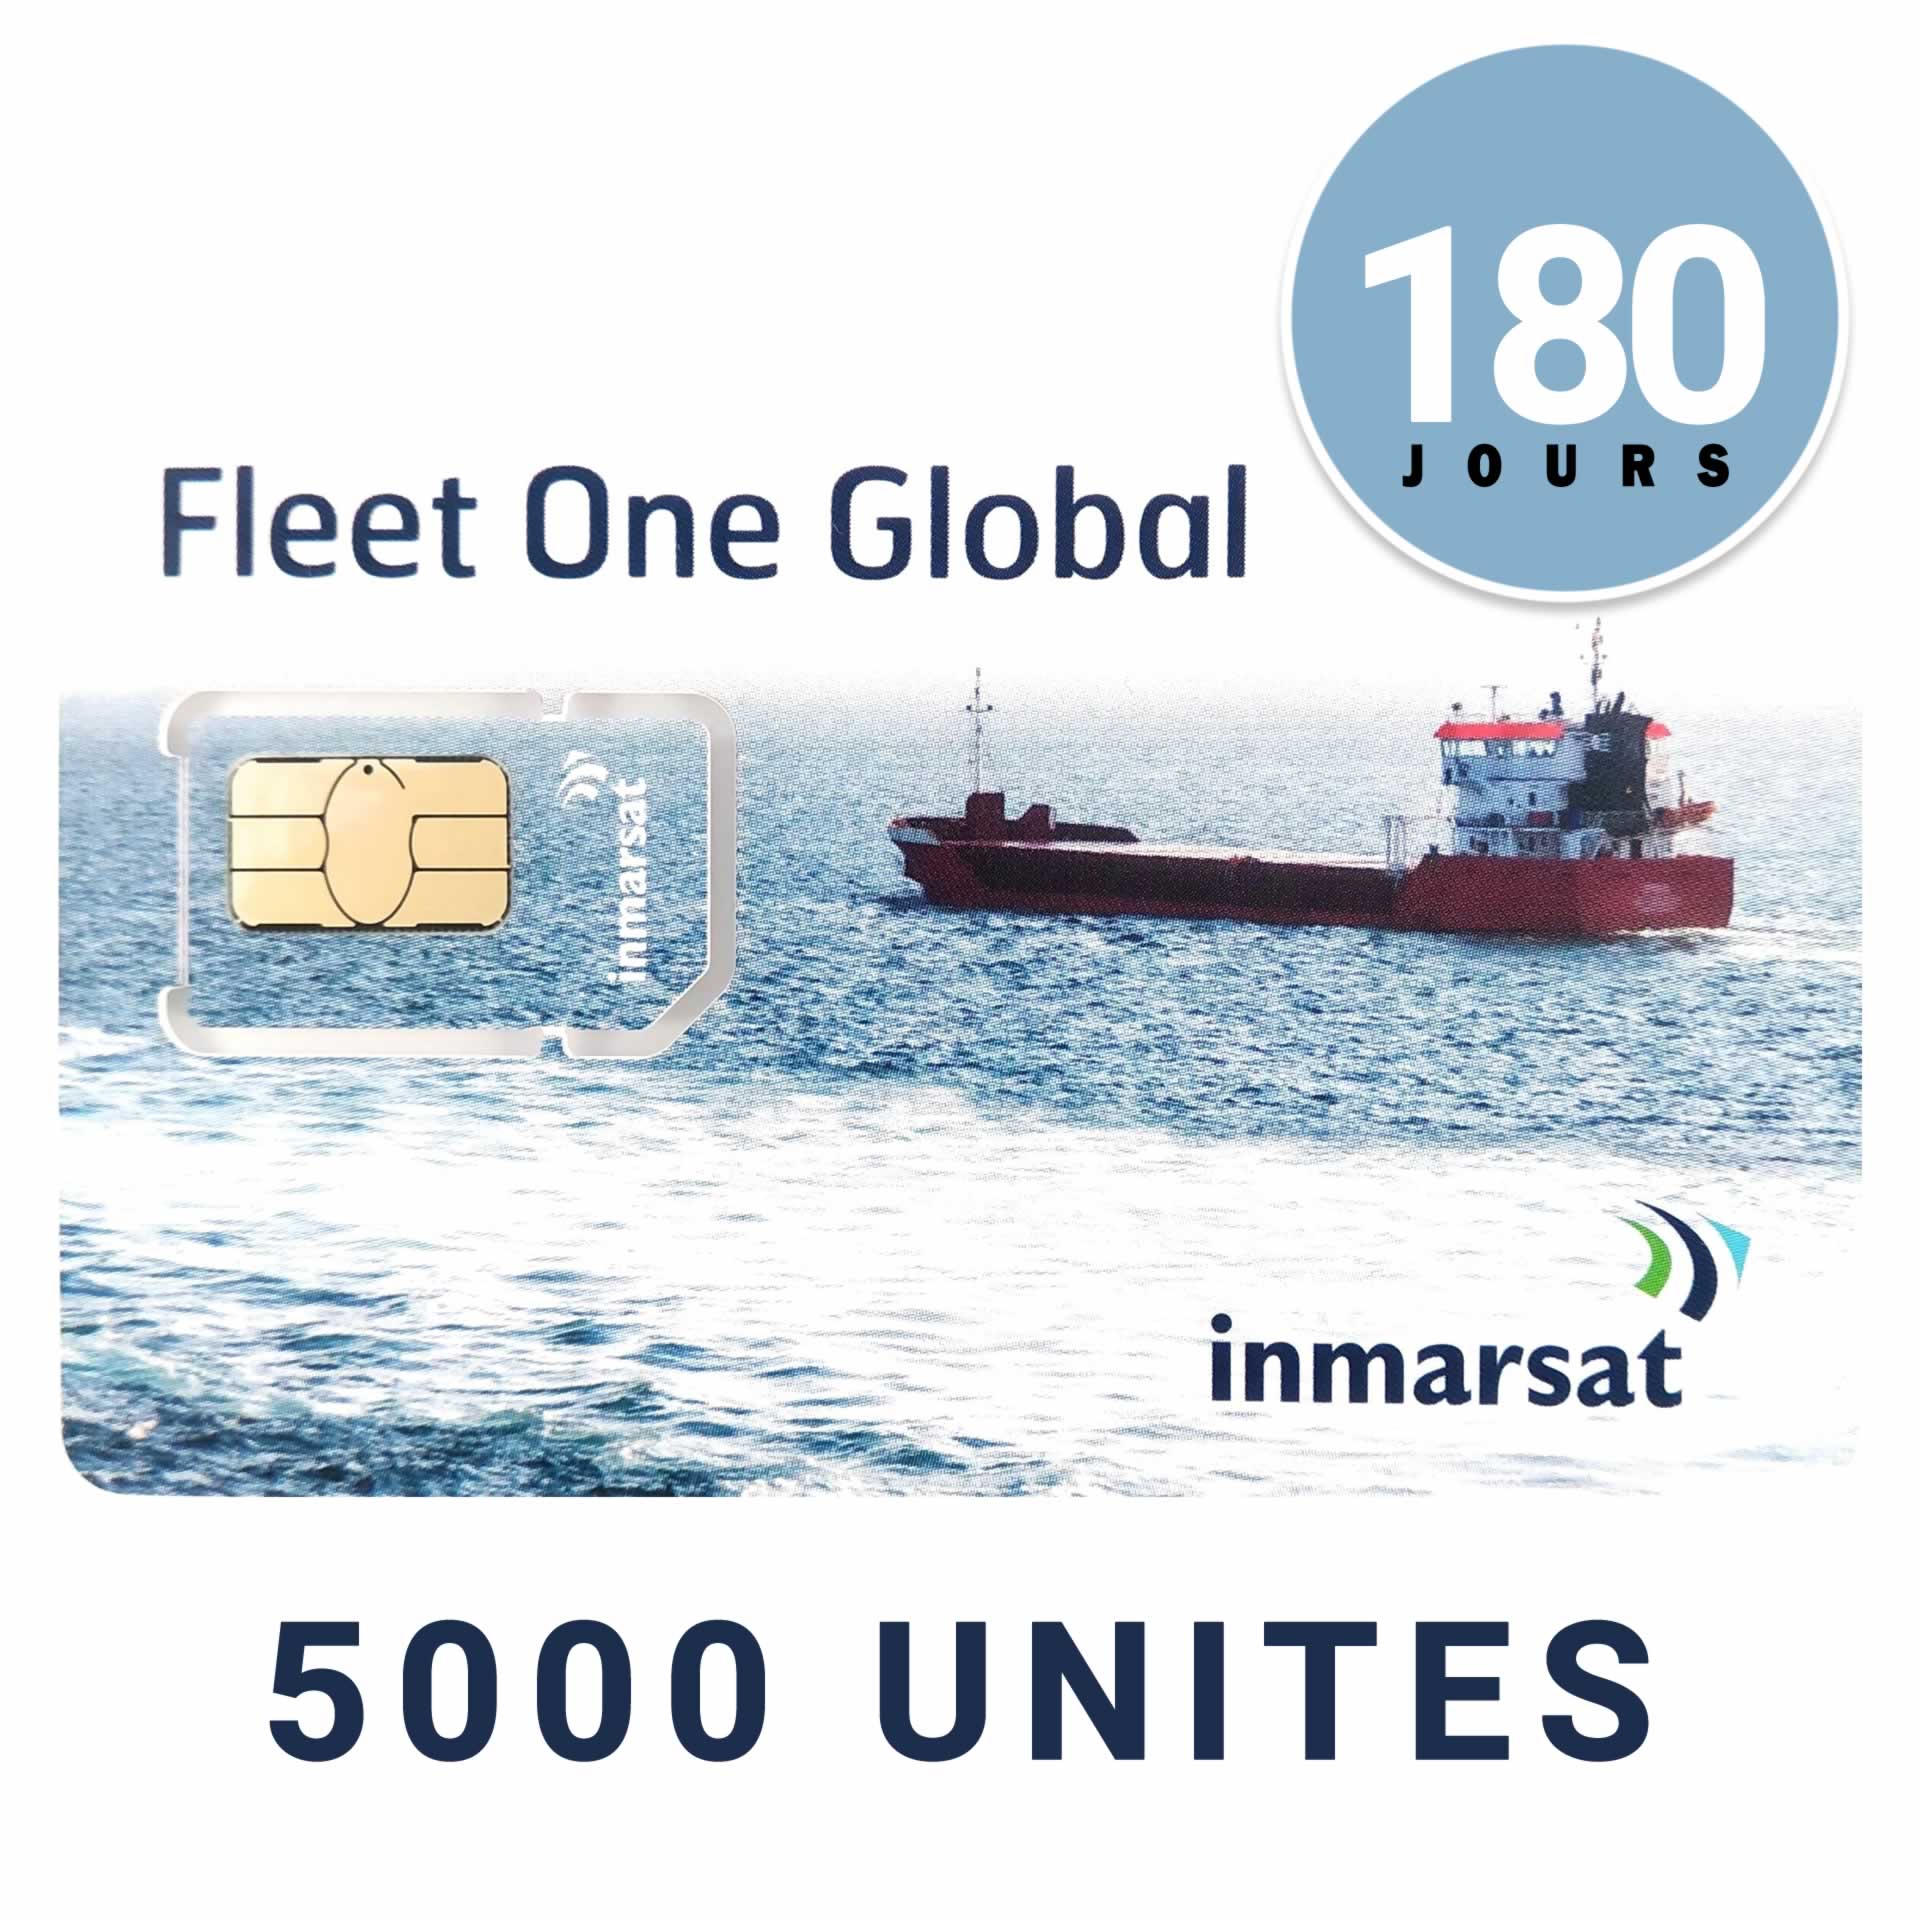 Carte Prépayée INMARSAT Rechargeable GLOBAL FLEET ONE - 5000 UNITES - 180 JOURS